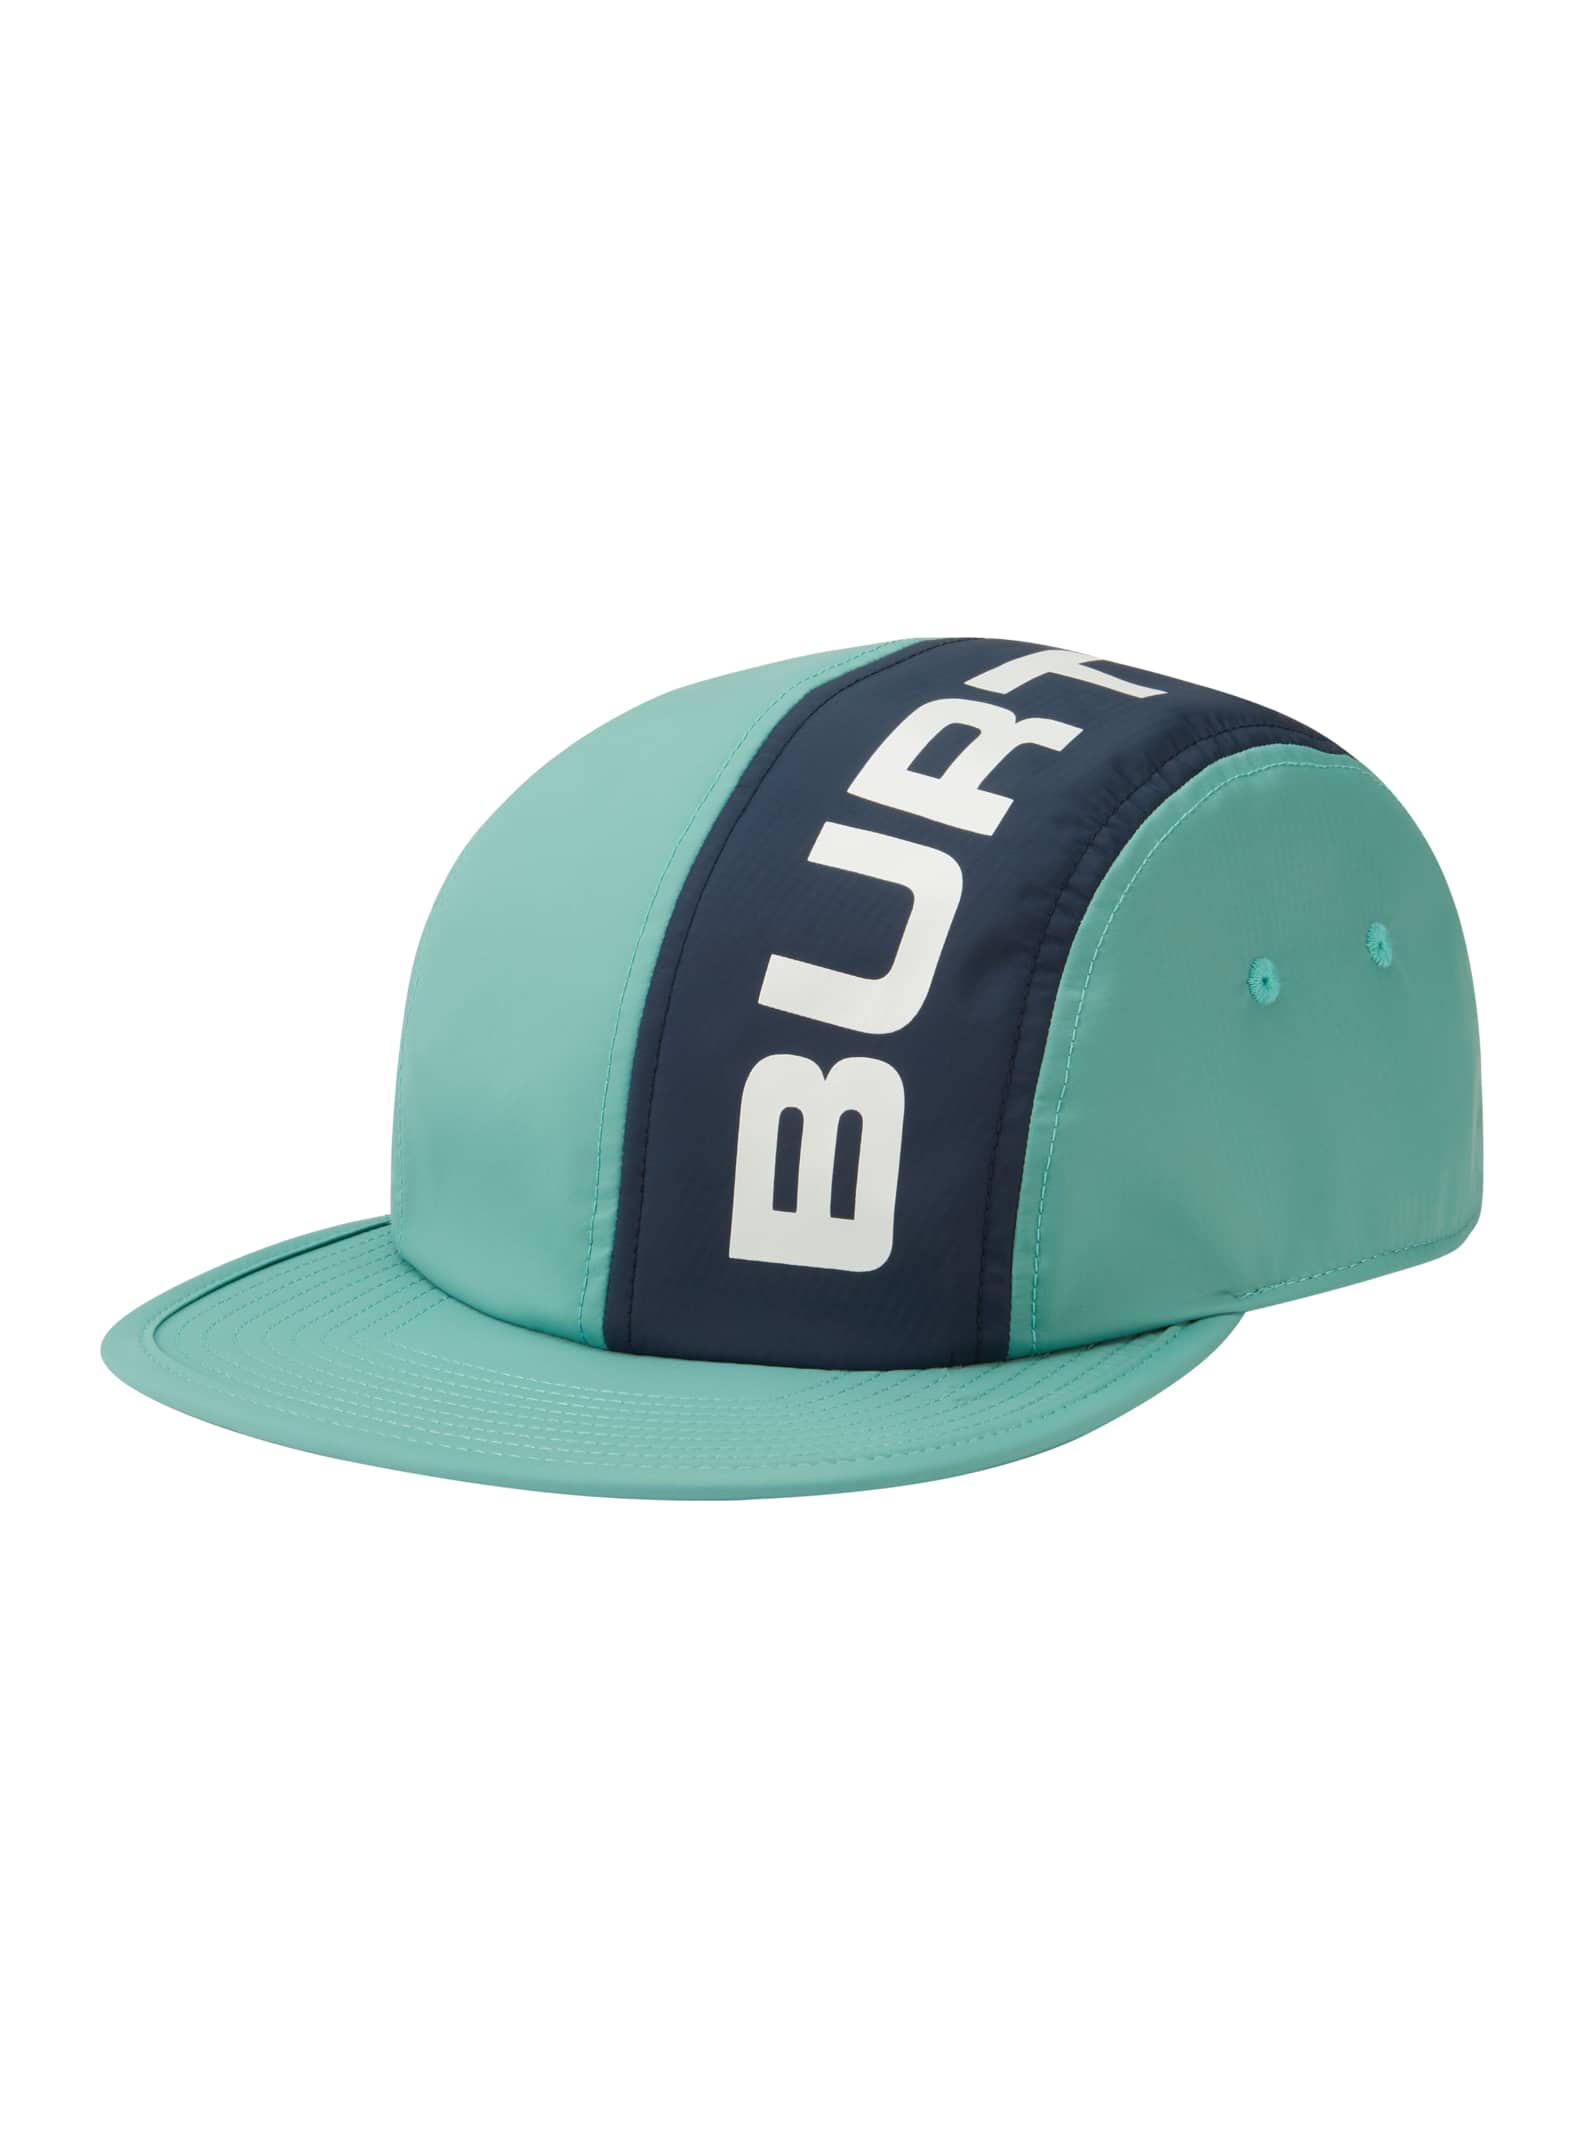 Burton Portal Hat | Burton.com Spring 2020 US